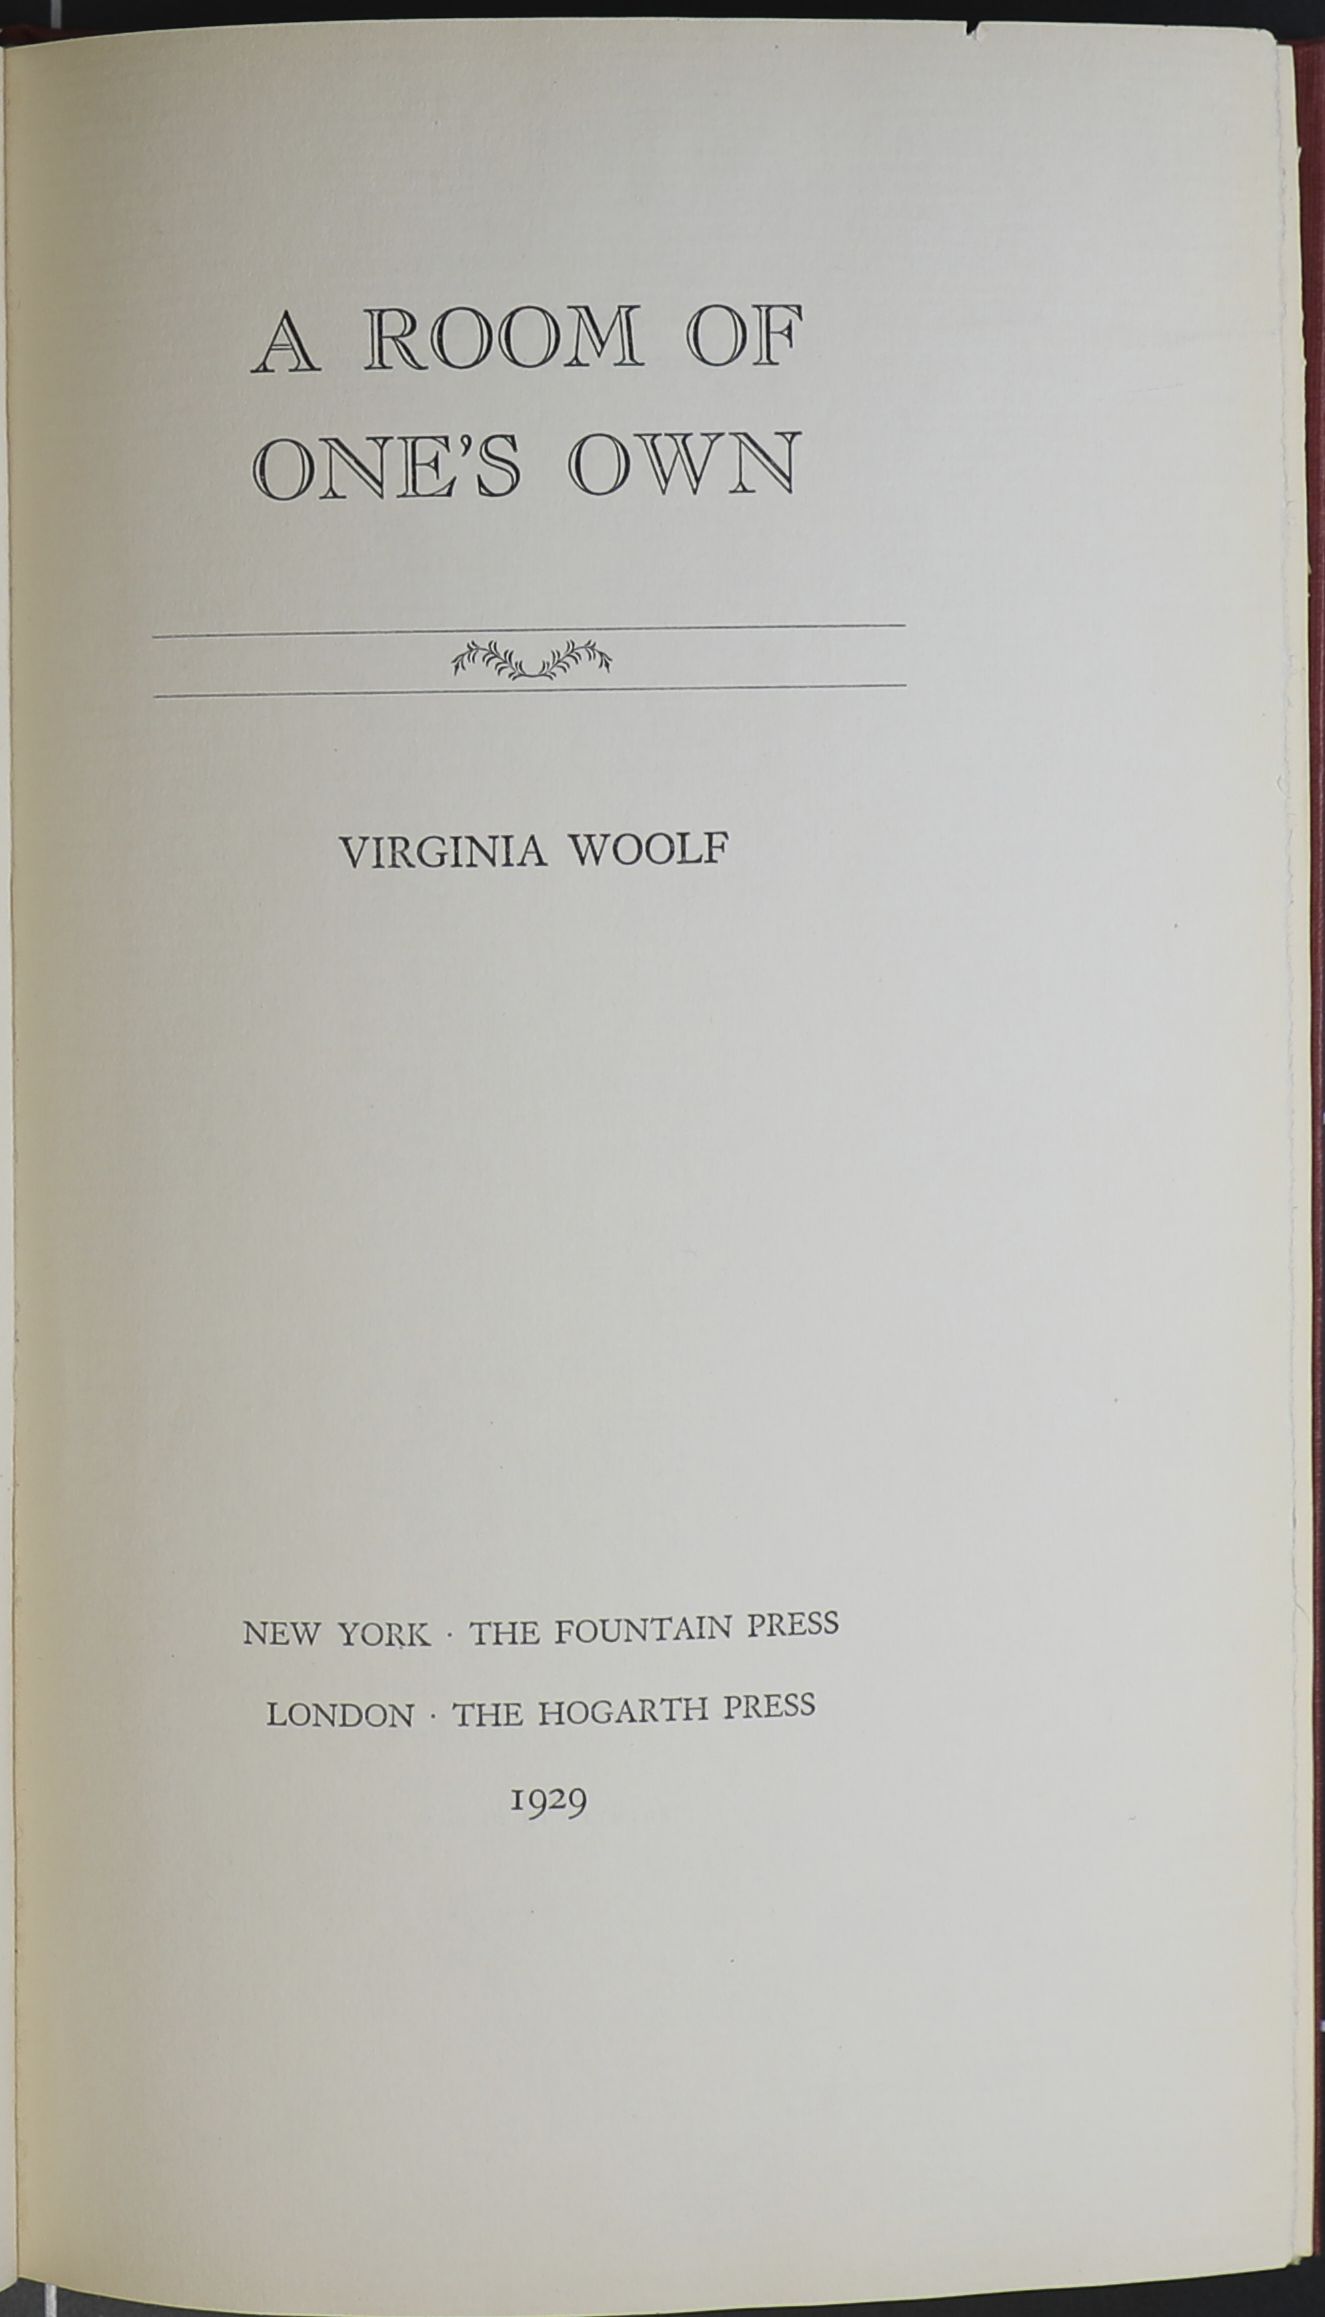 essay by virginia woolf 1929 crossword clue